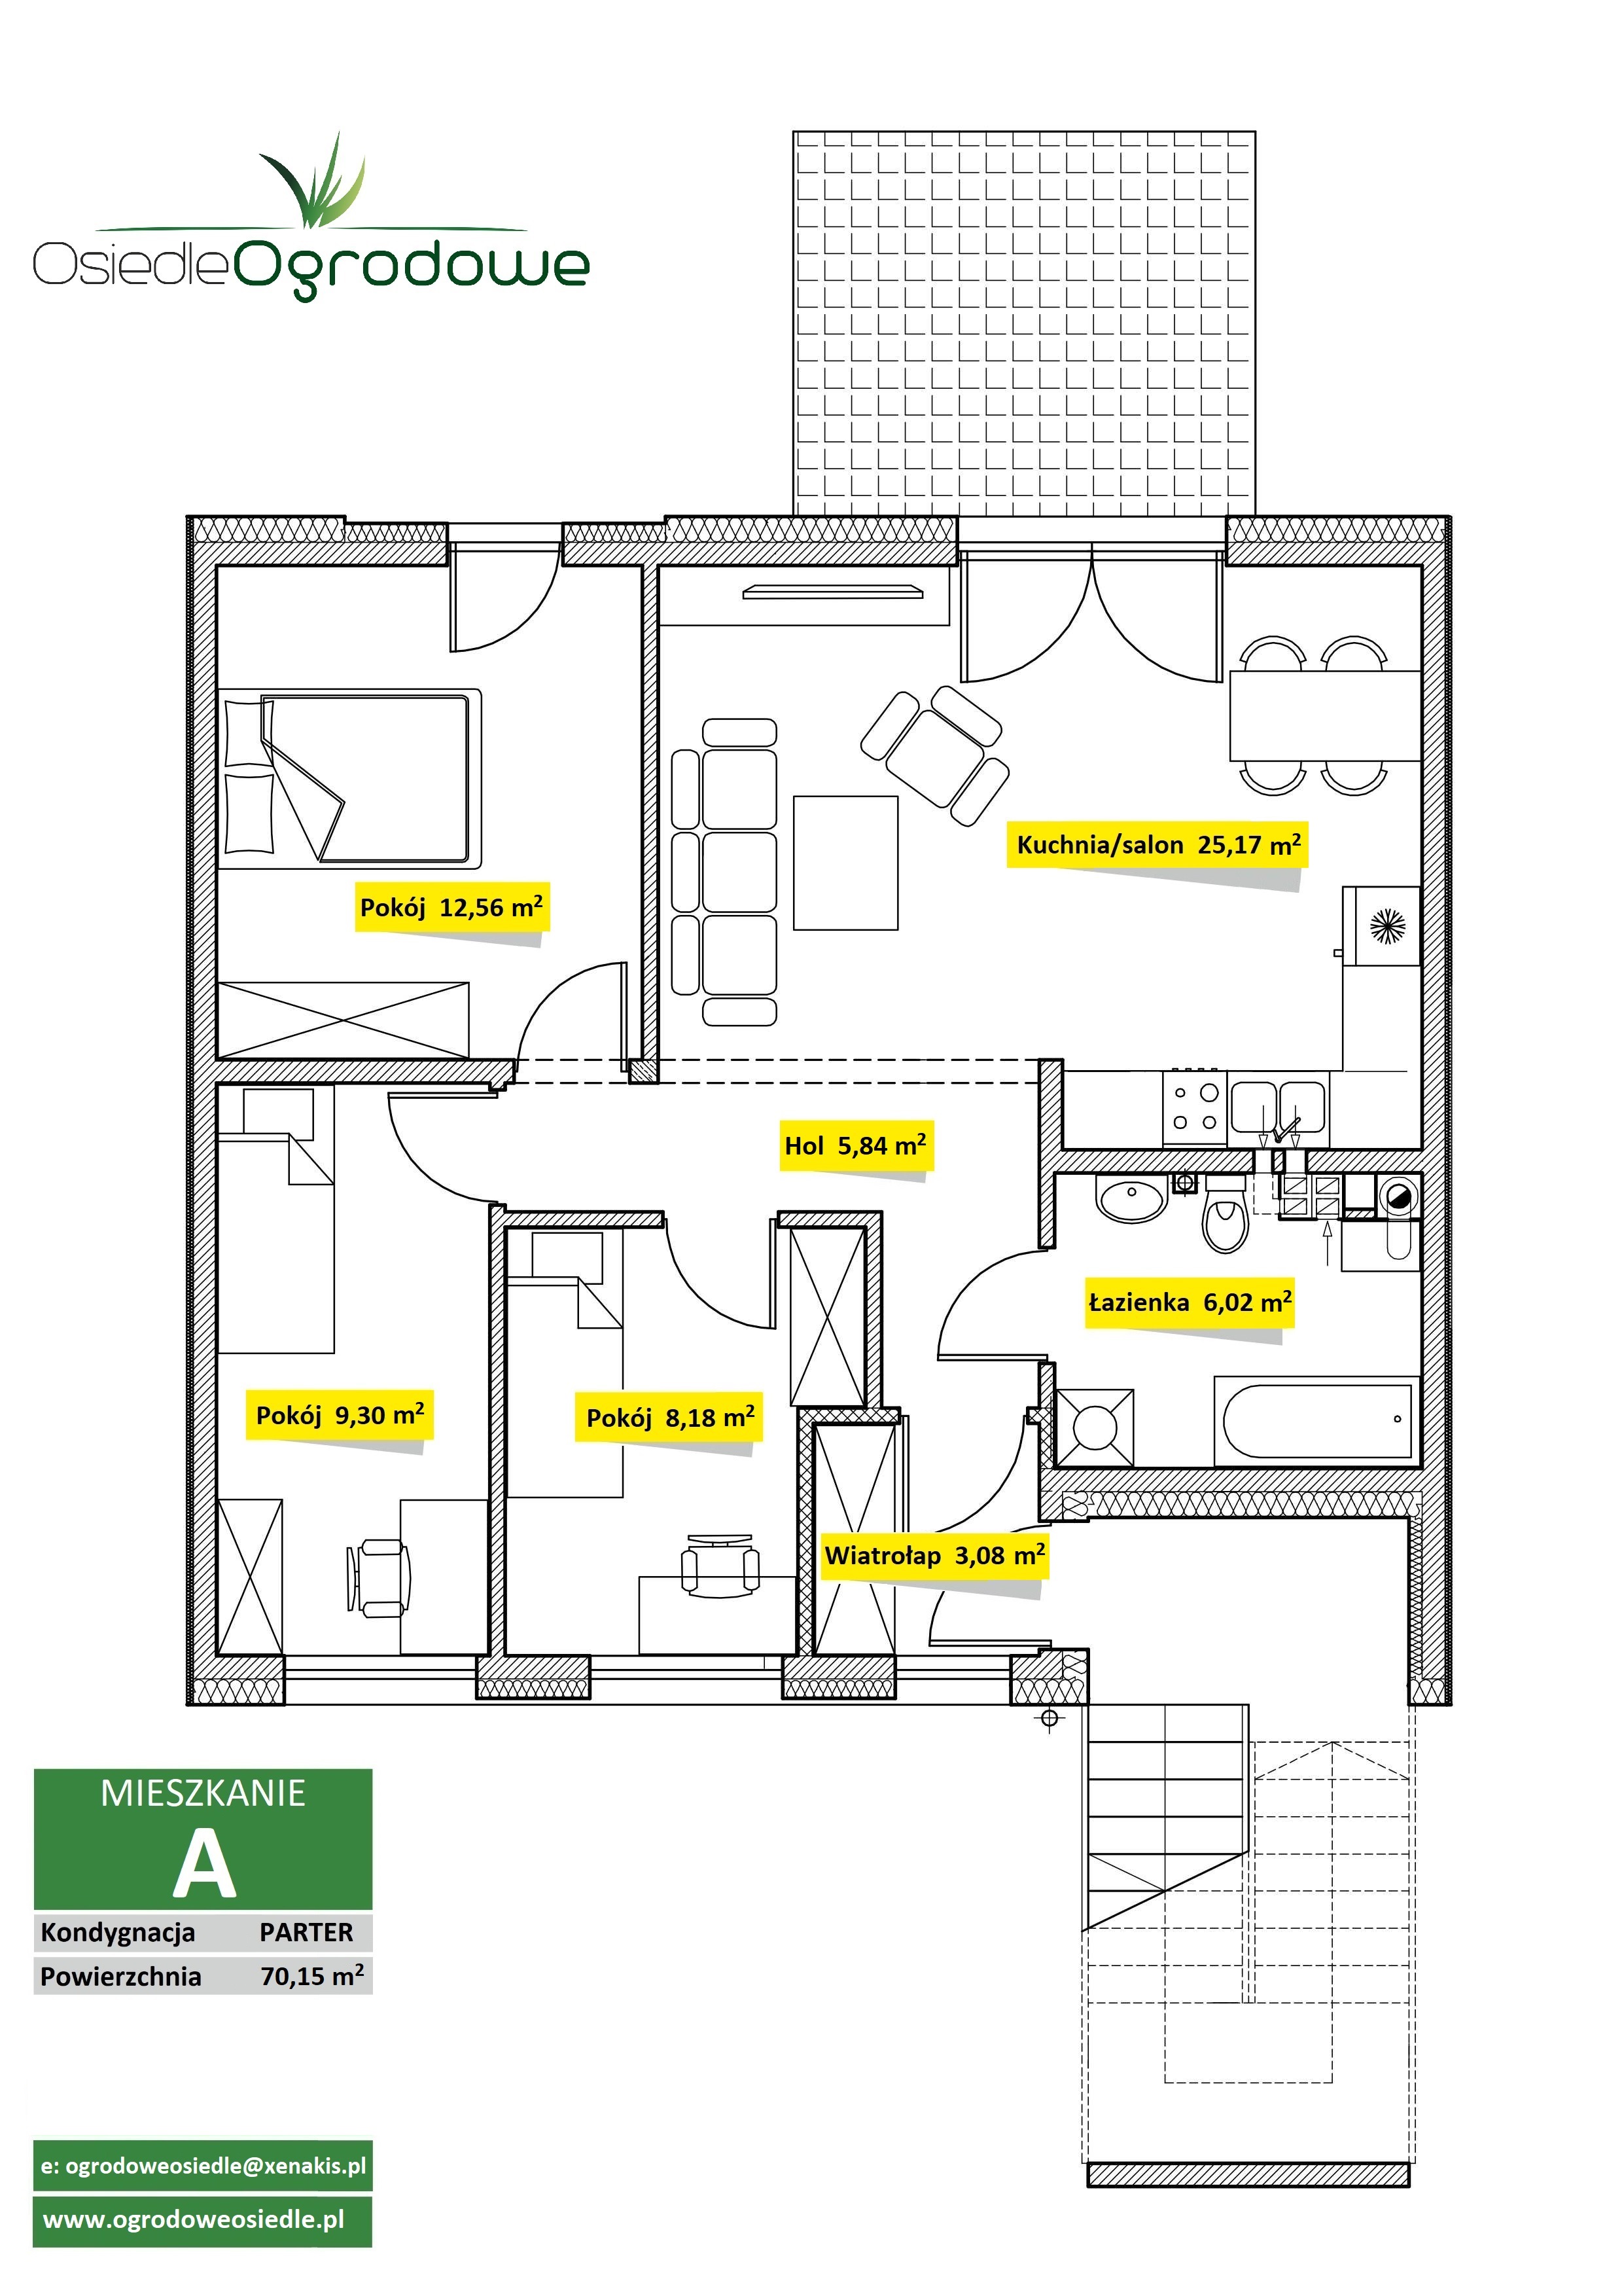 Mieszkanie 70,15 m2_parter - Parter